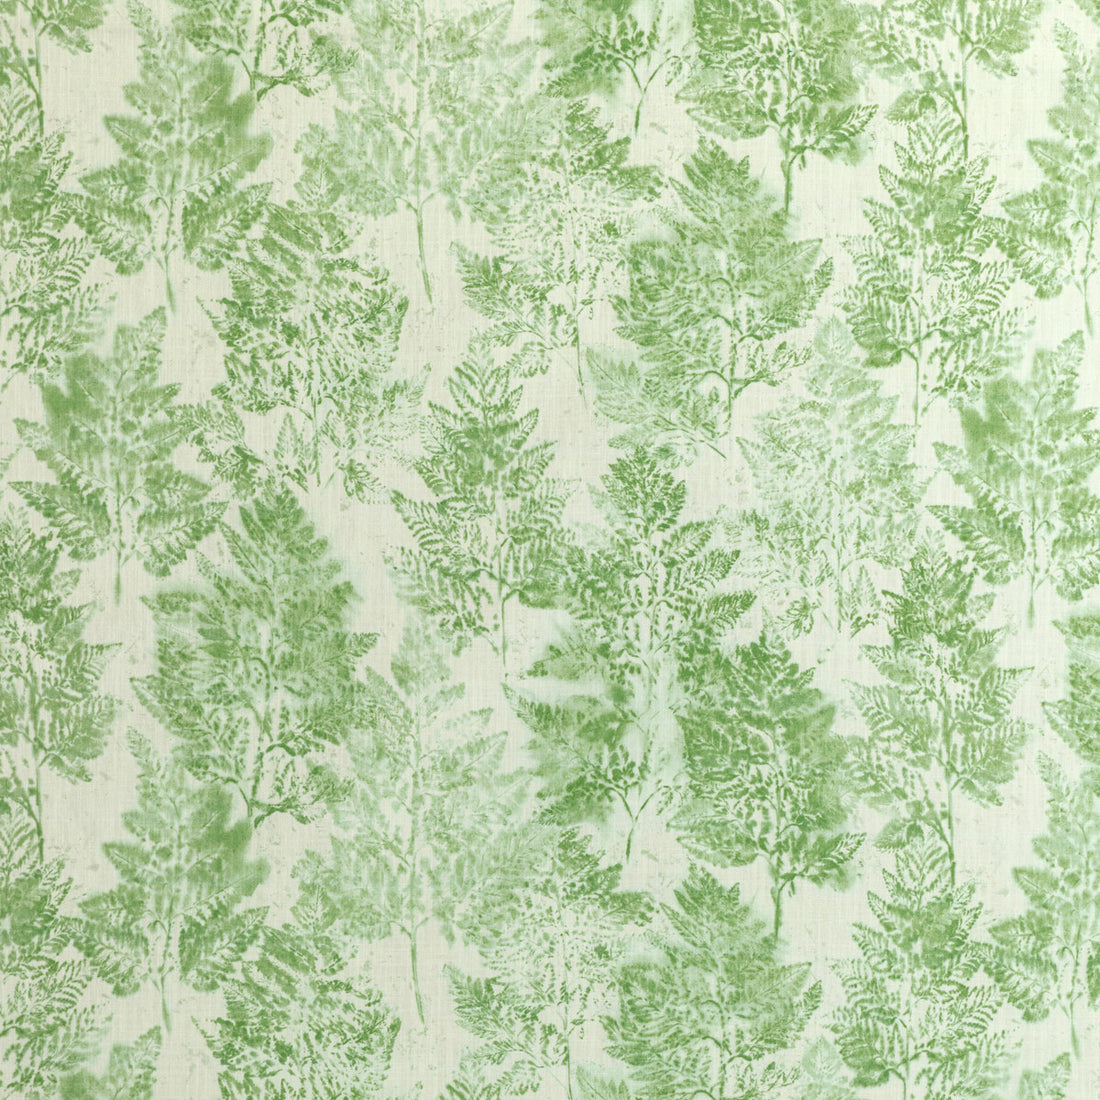 Heiki Fern fabric in emerald color - pattern HEIKI FERN.3.0 - by Kravet Basics in the Monterey collection